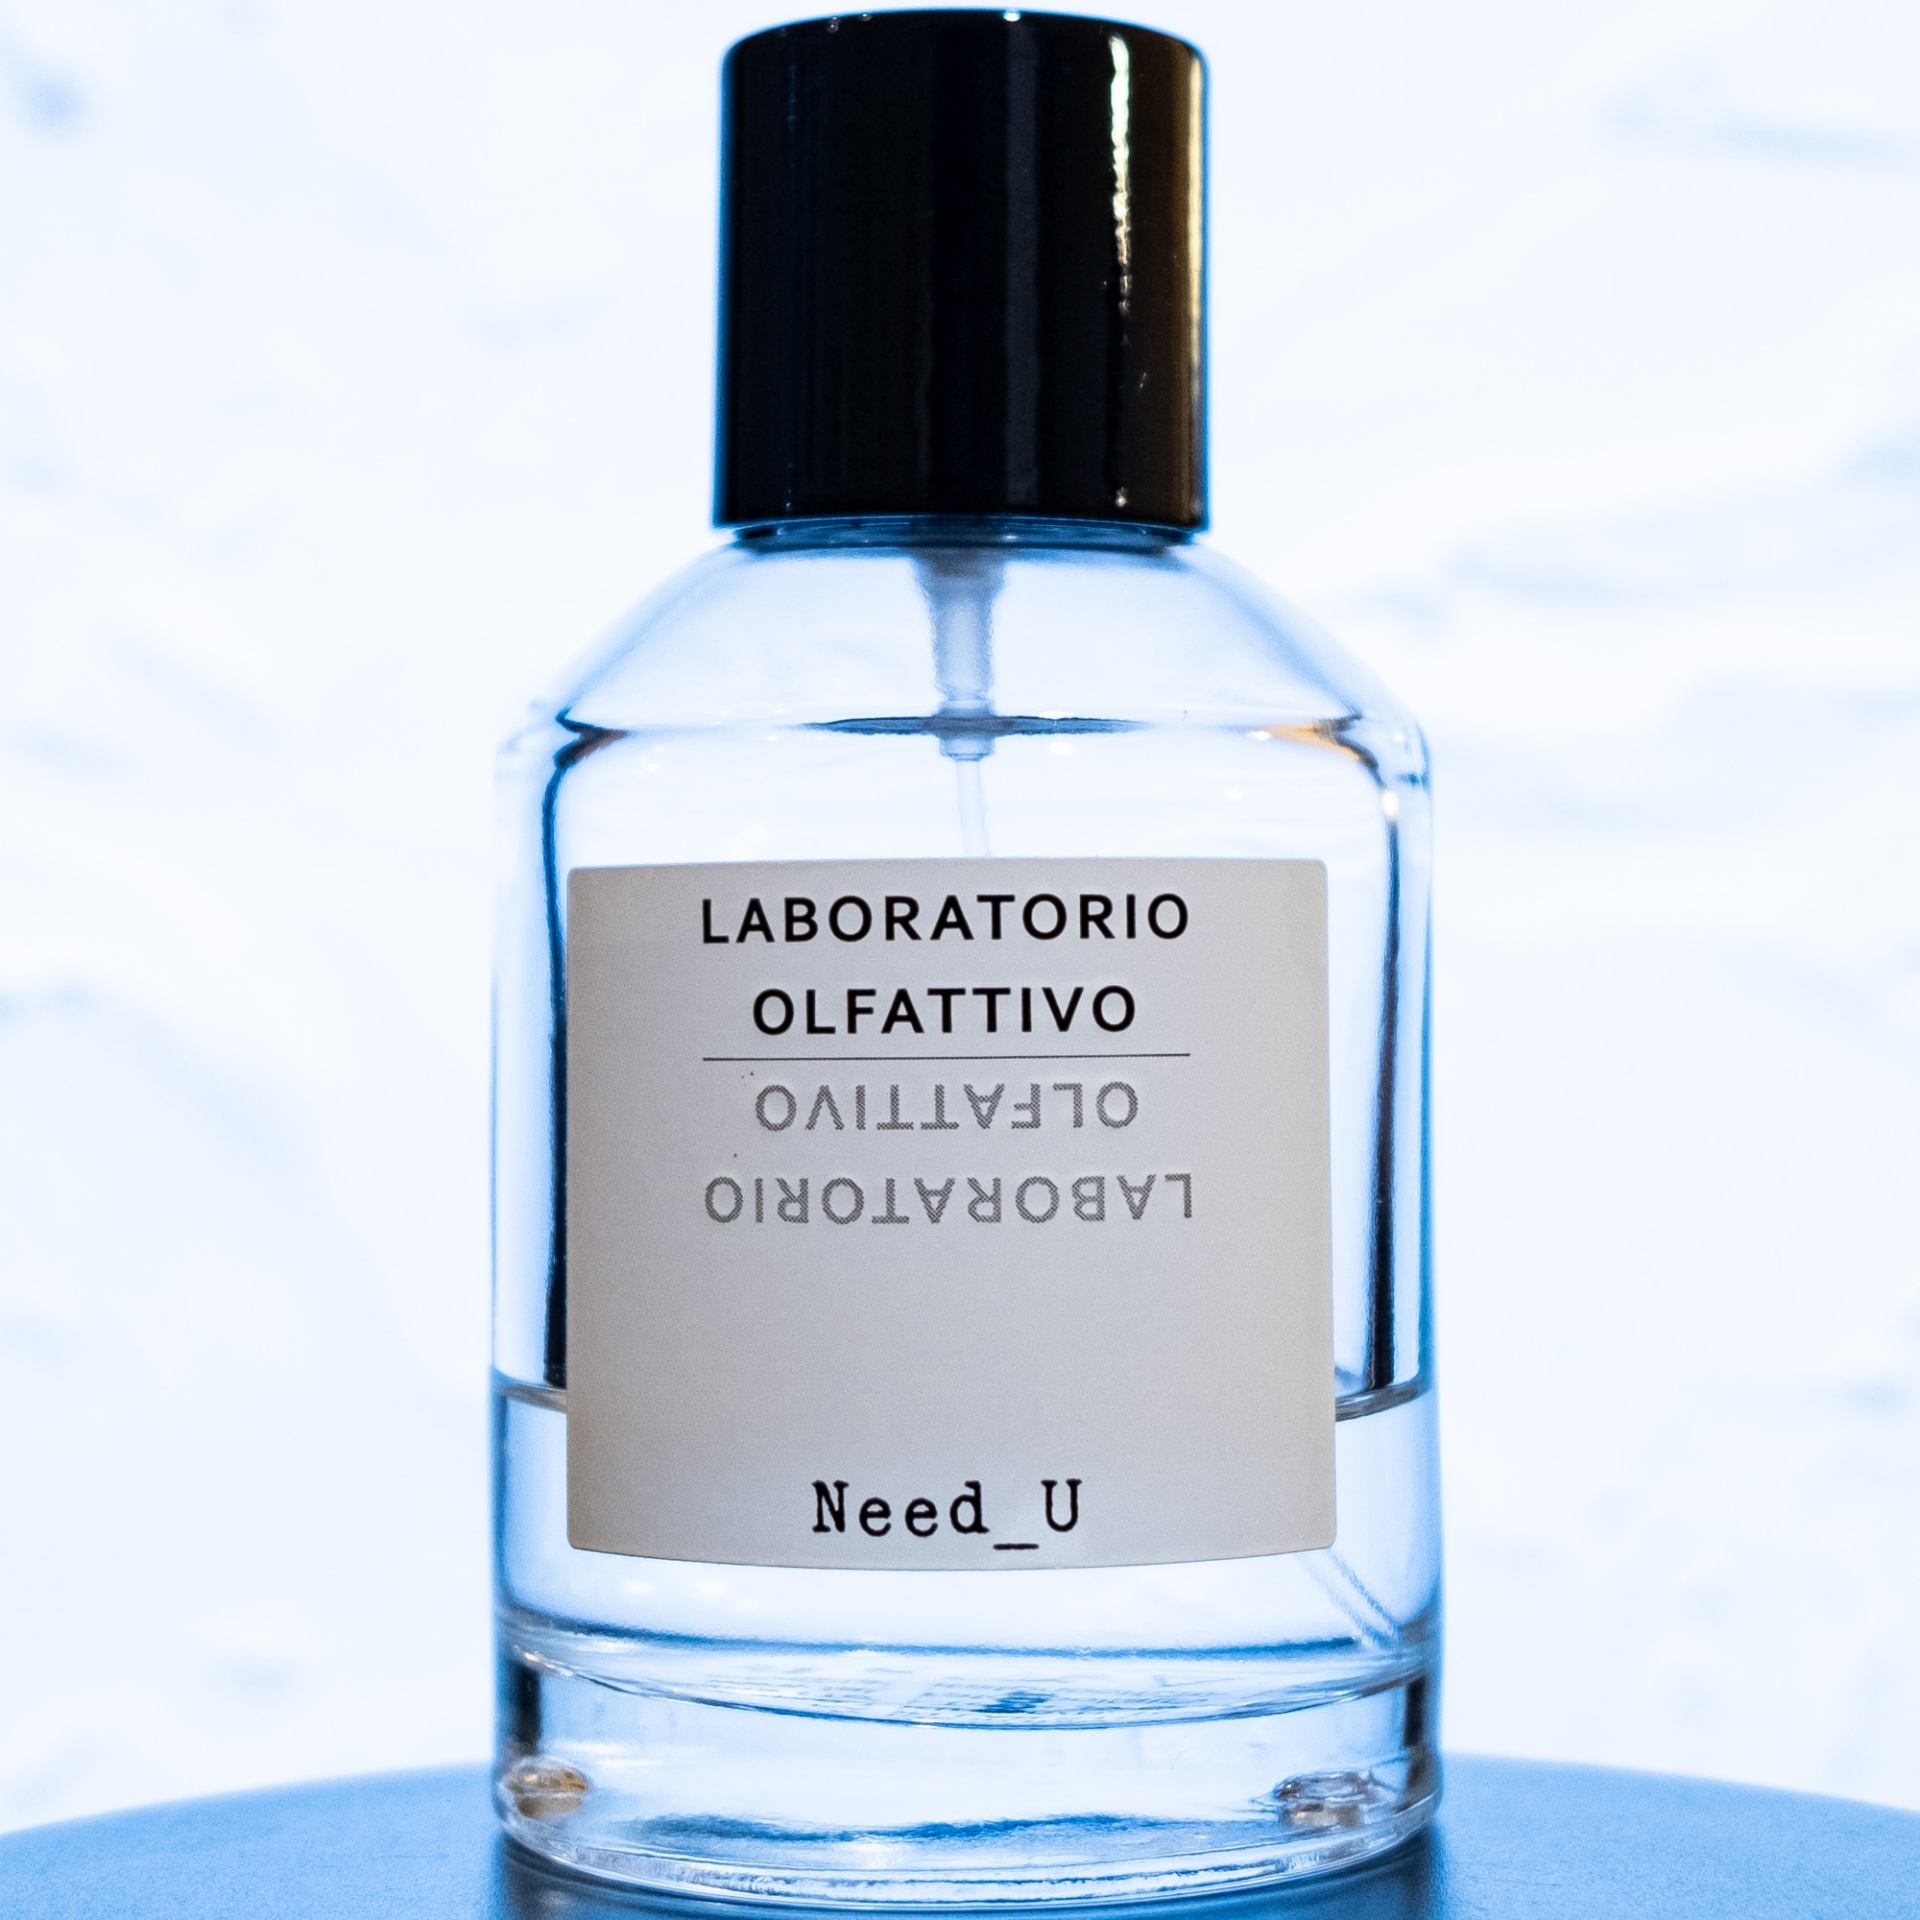 laboratorio-olfattivo-need_u